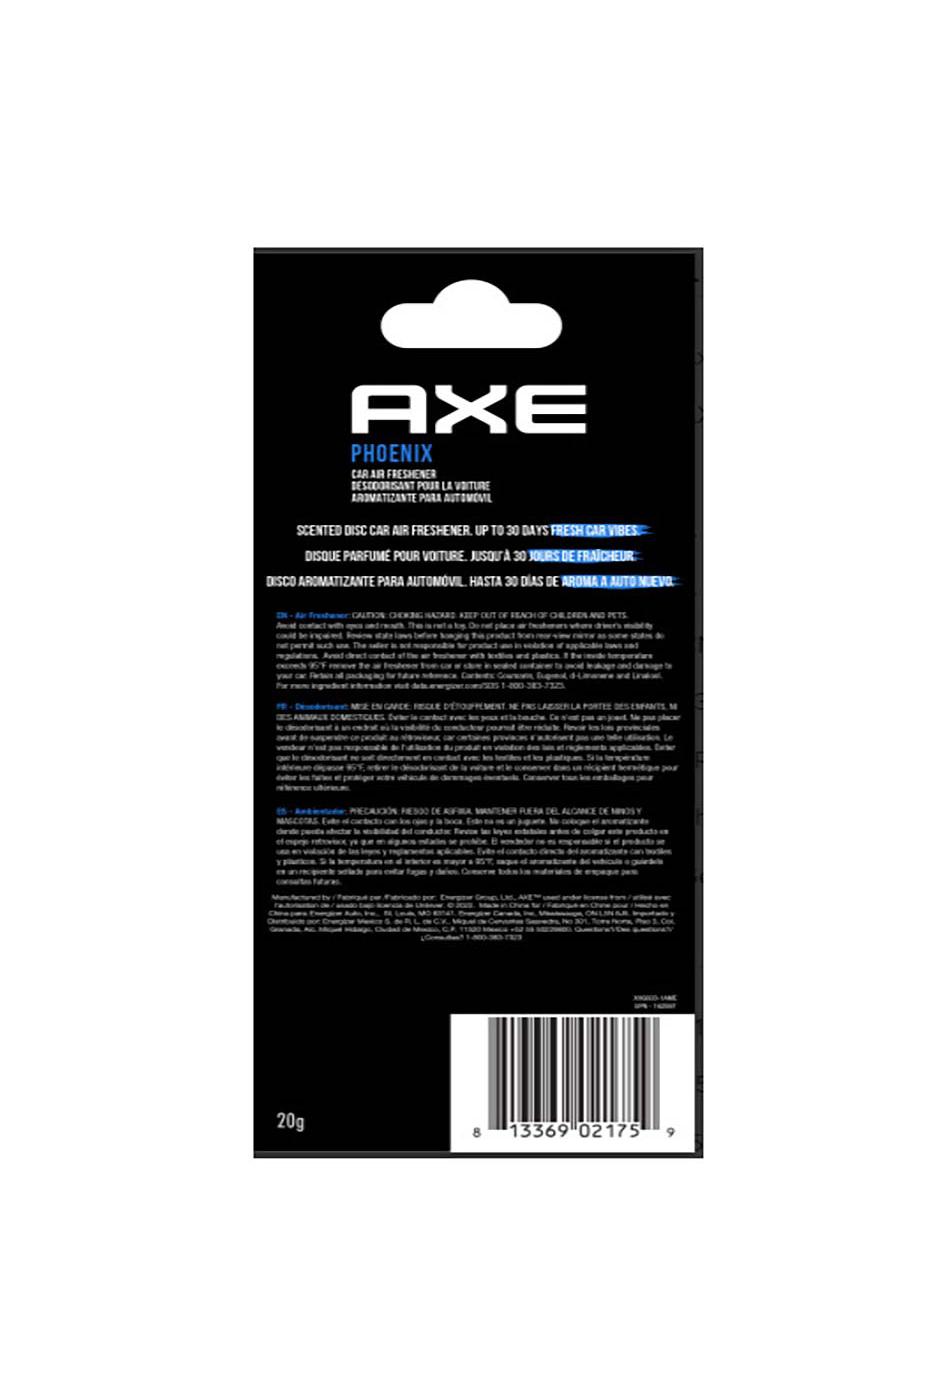 Axe Phoenix Hanging Gel Auto Air Freshener - Shop Air Fresheners at H-E-B